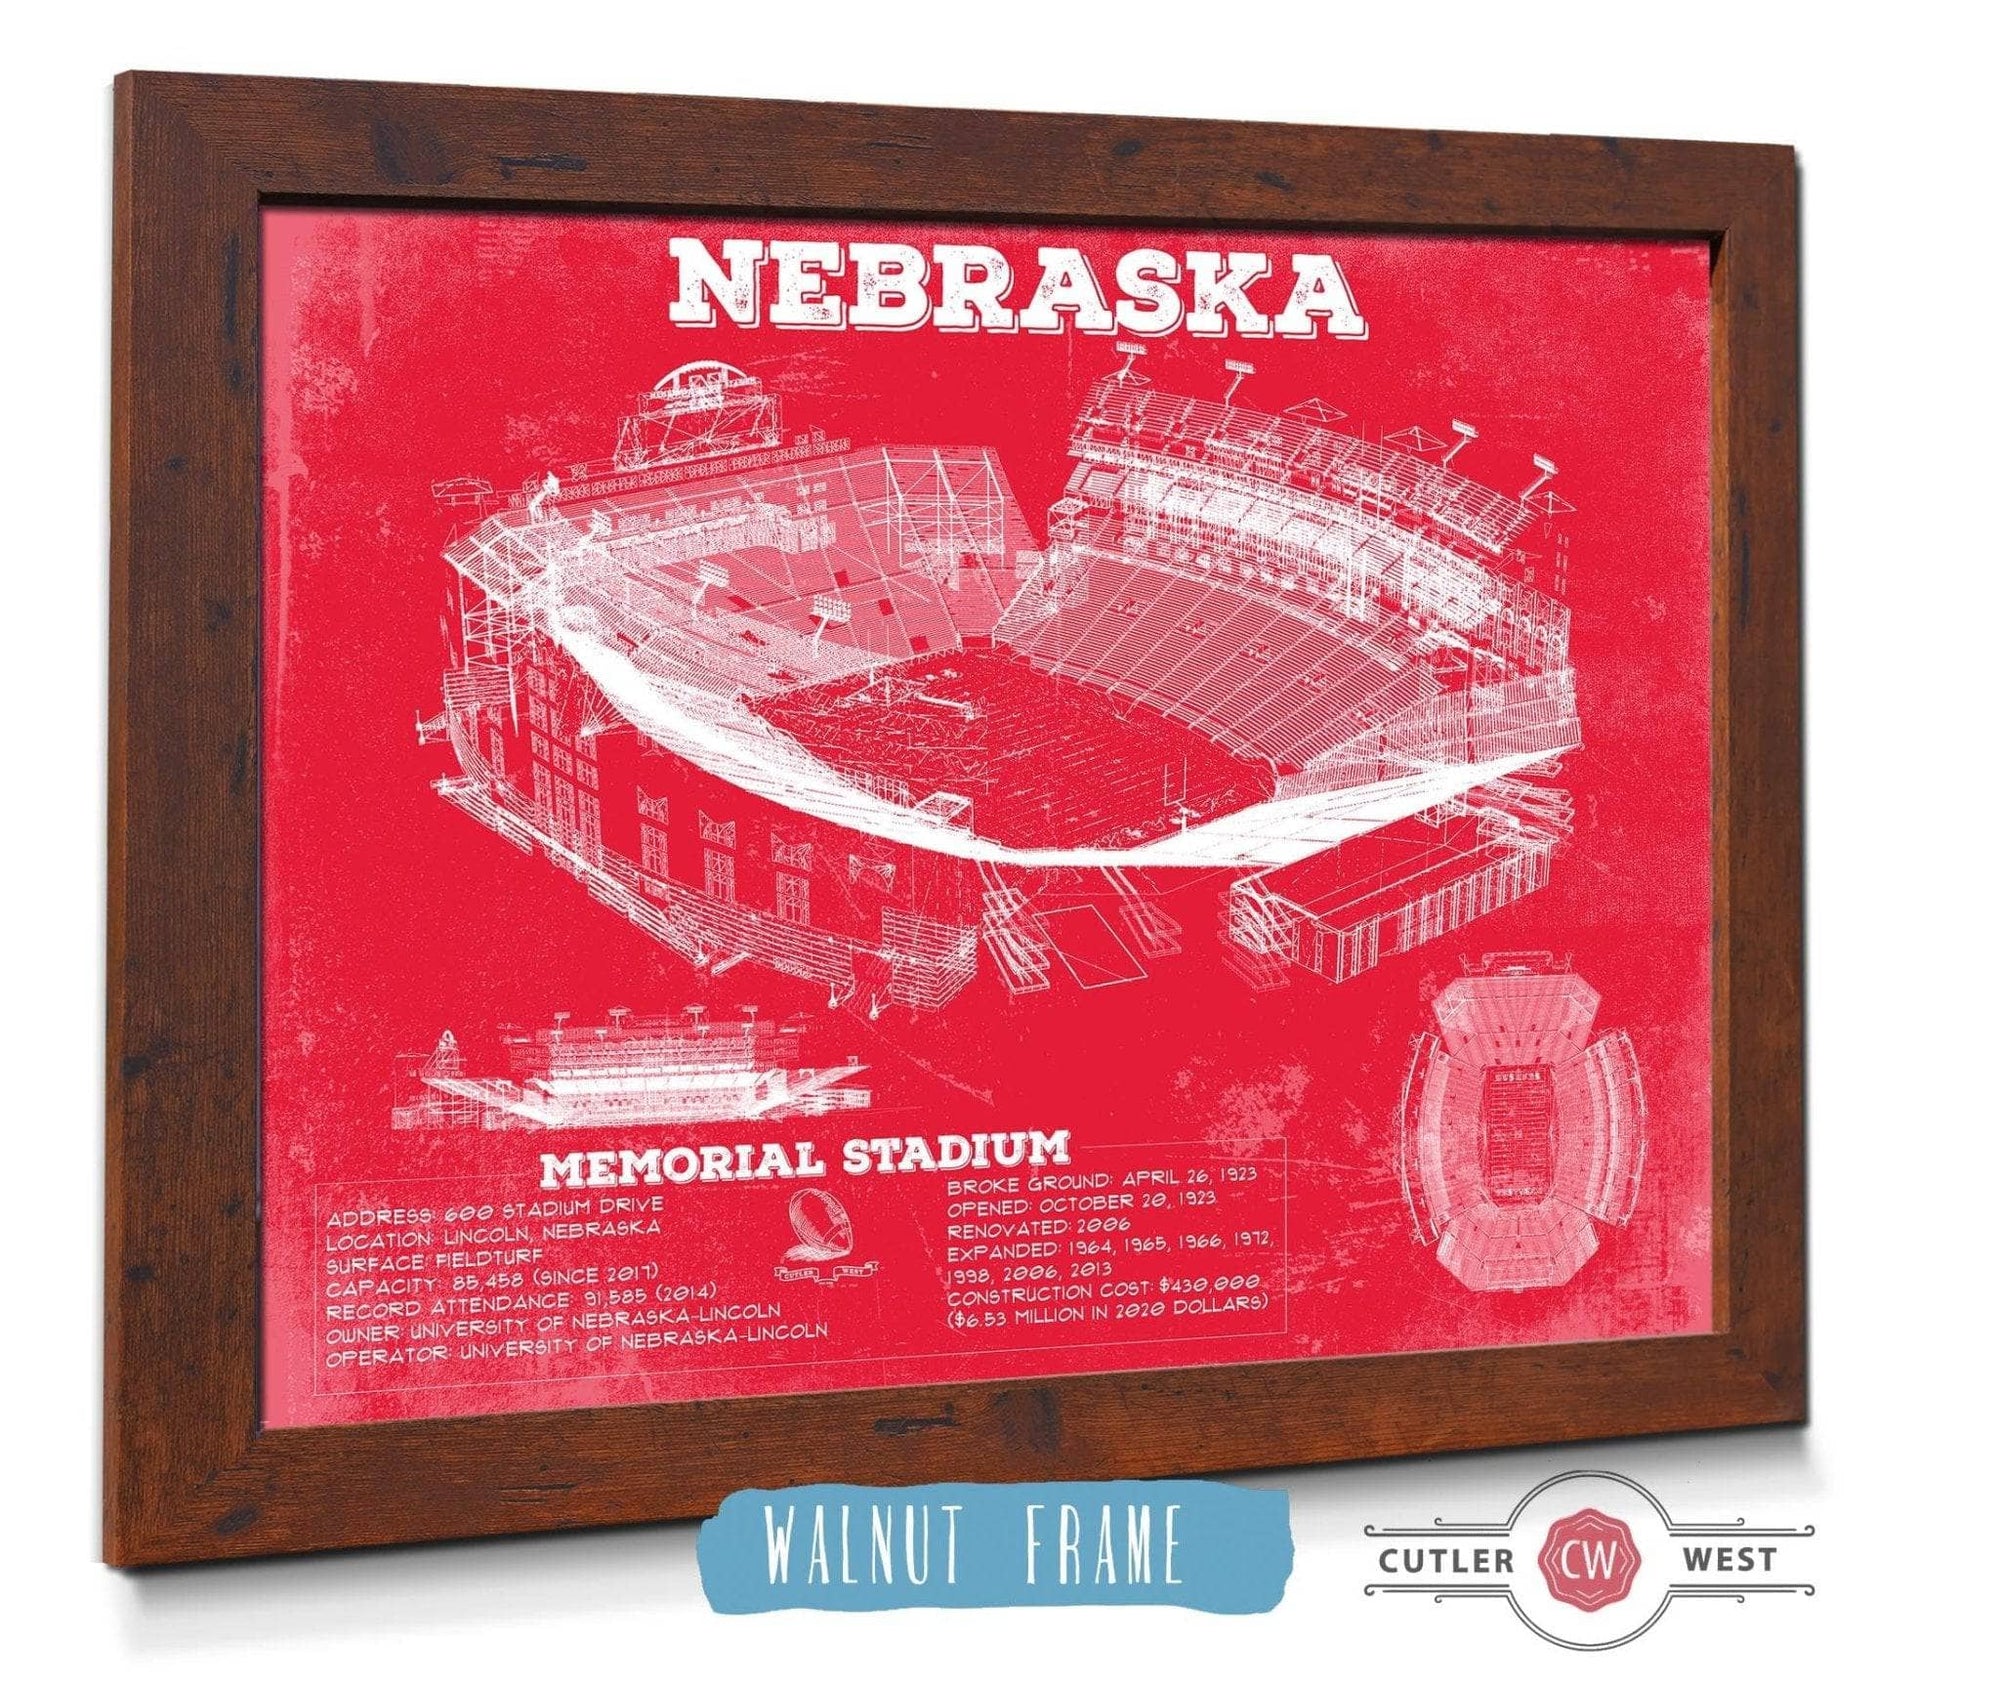 Cutler West College Football Collection 14" x 11" / Walnut Frame Nebraska Cornhuskers - Vintage Memorial Stadium (Lincoln) Art Print 933350118